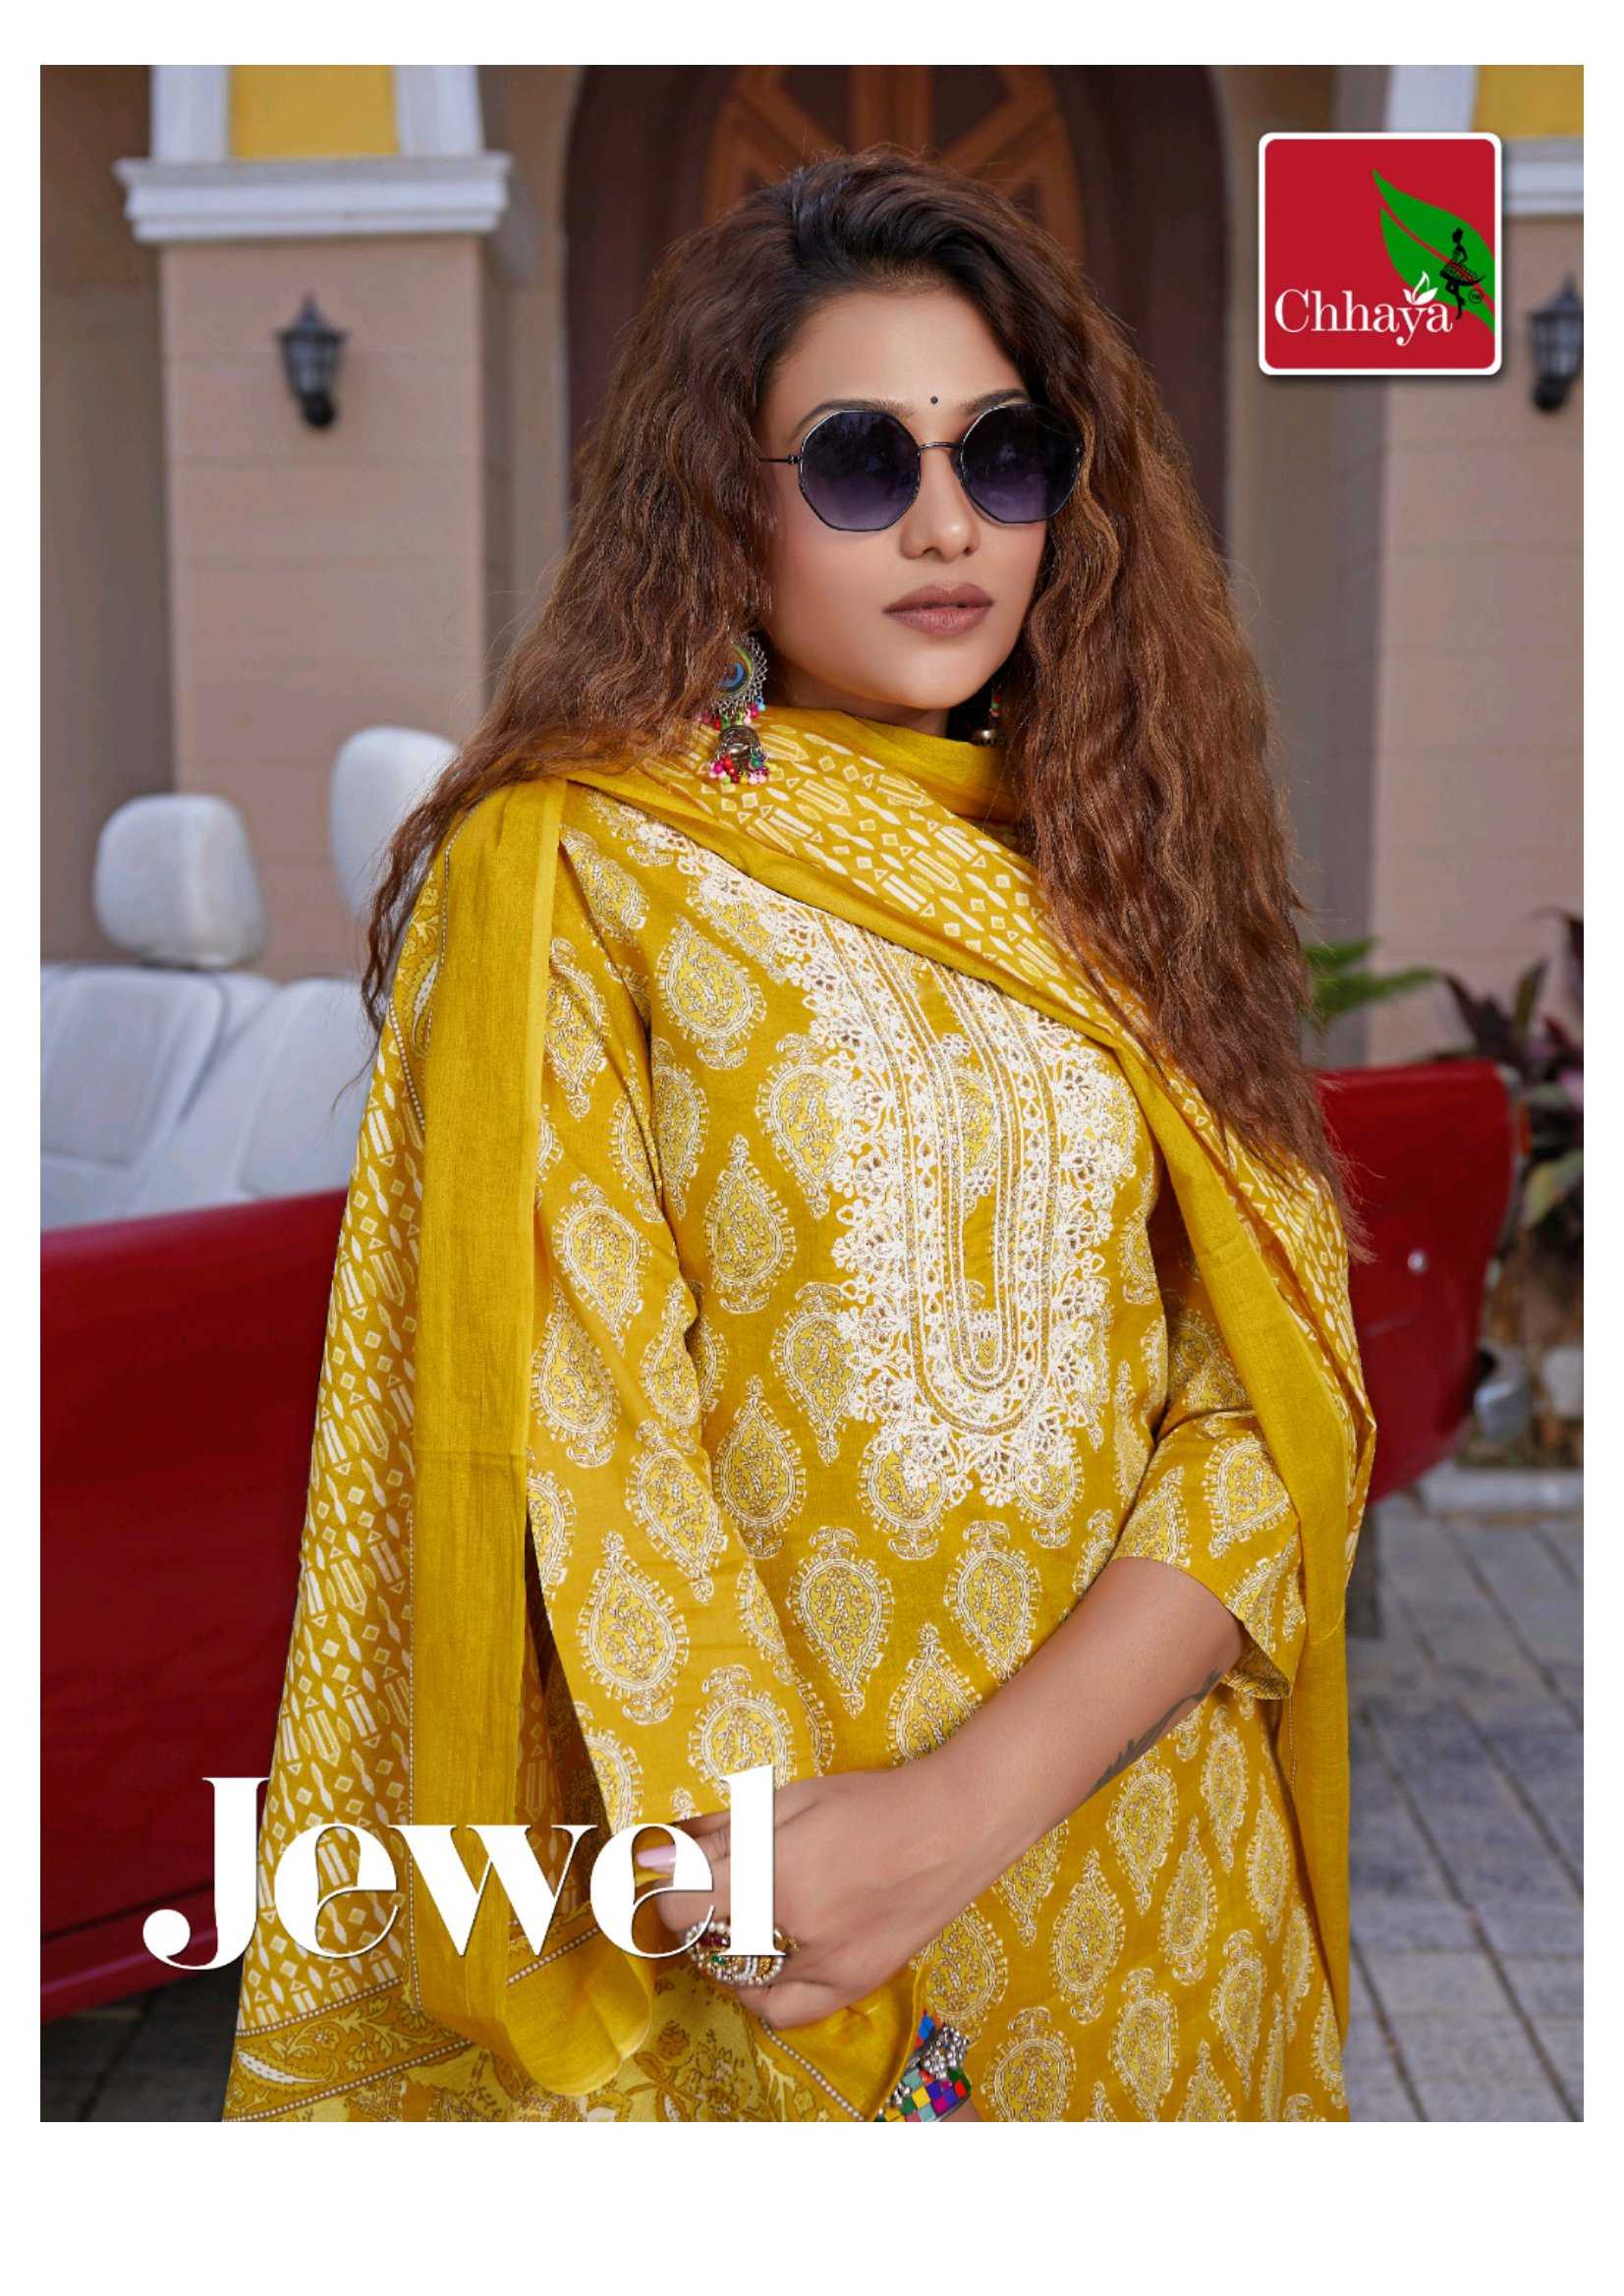 jewel by chhaya kurti fashionable design full stitch salwar kameez